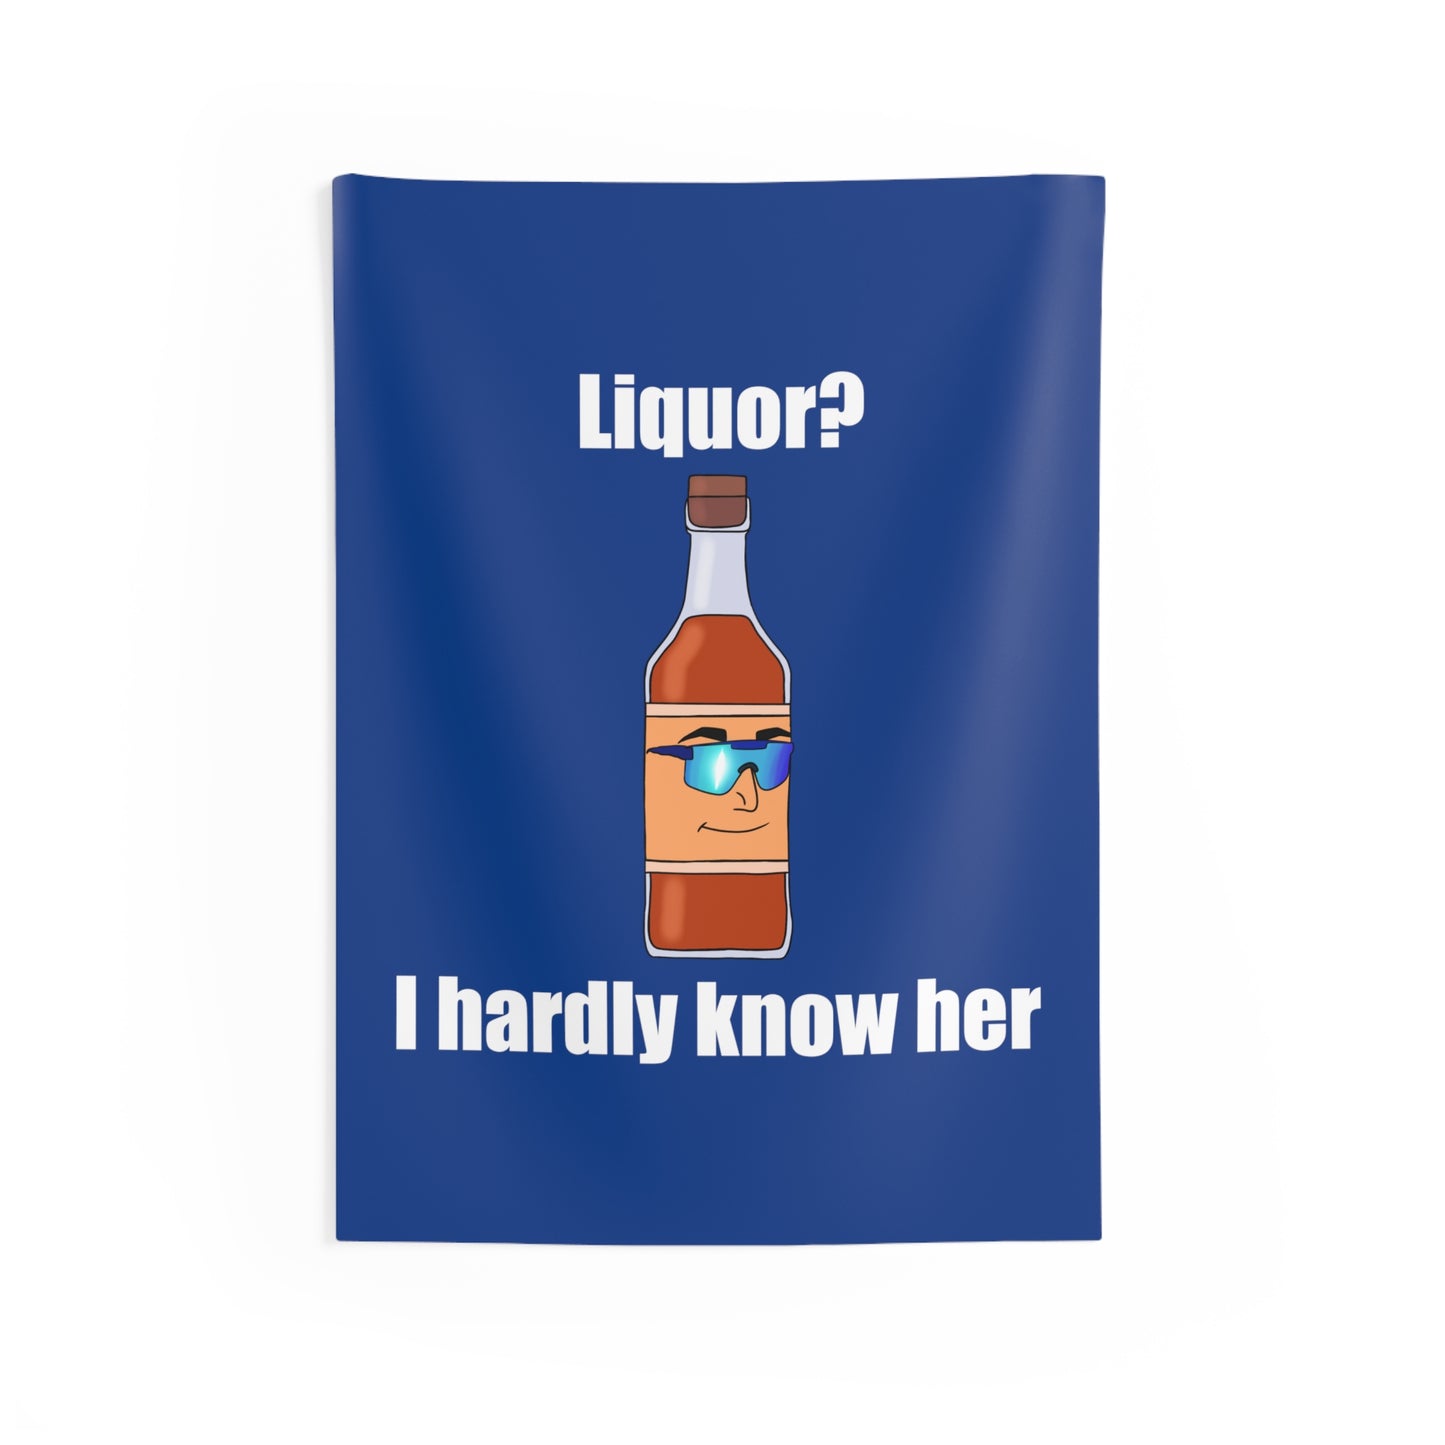 Liquor? I hardly know her tapestry